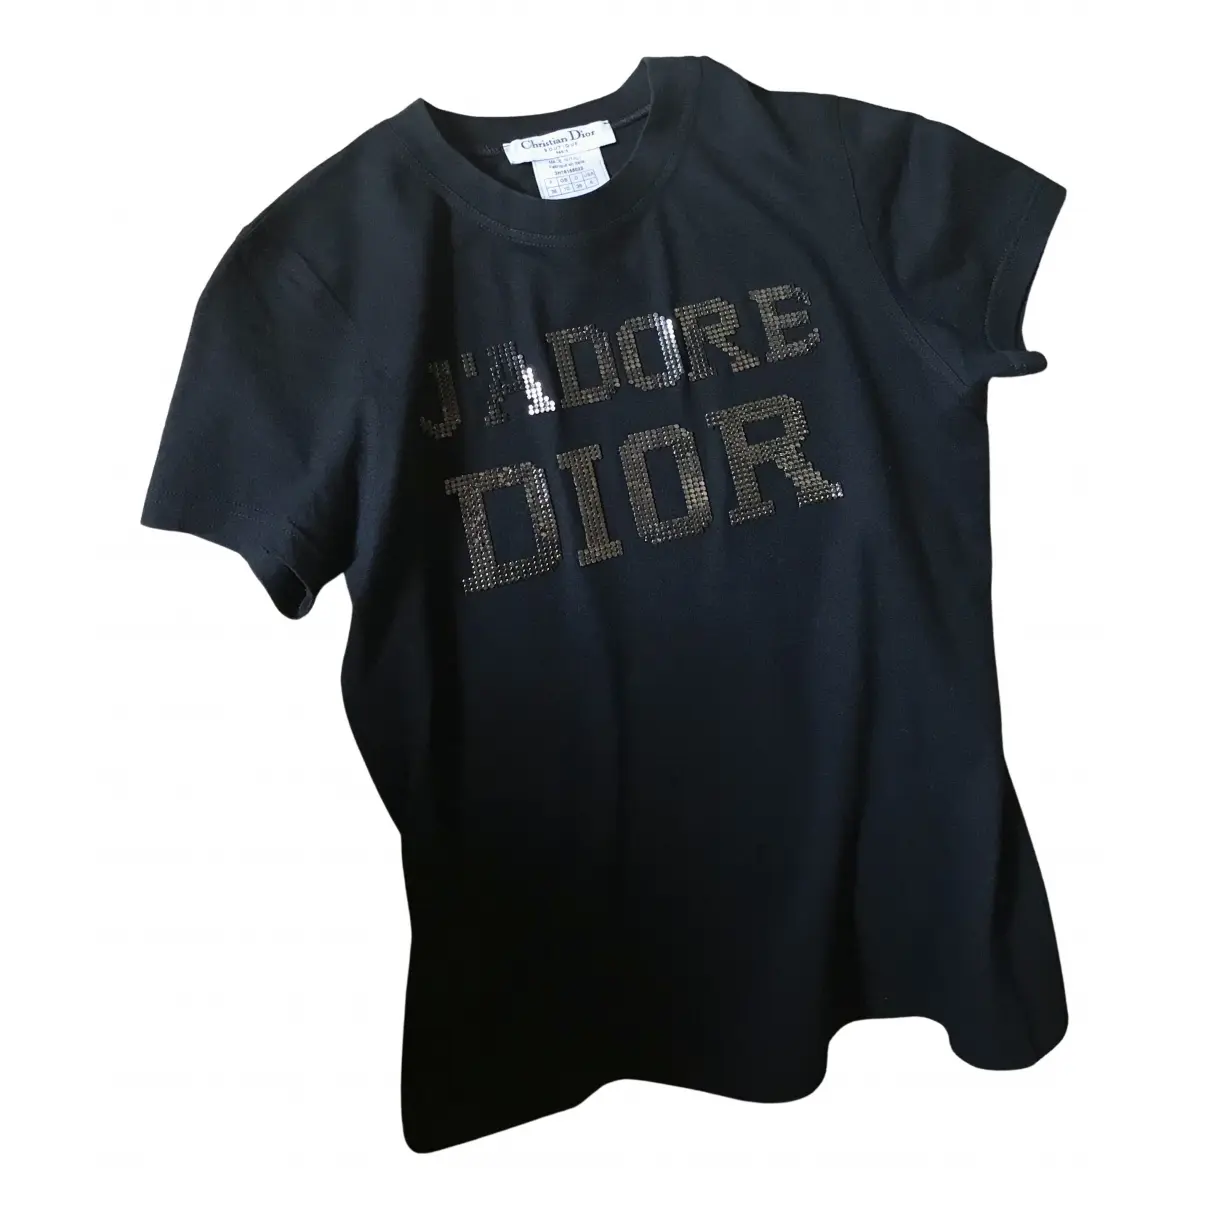 J'adore Dior t-shirt Dior - Vintage